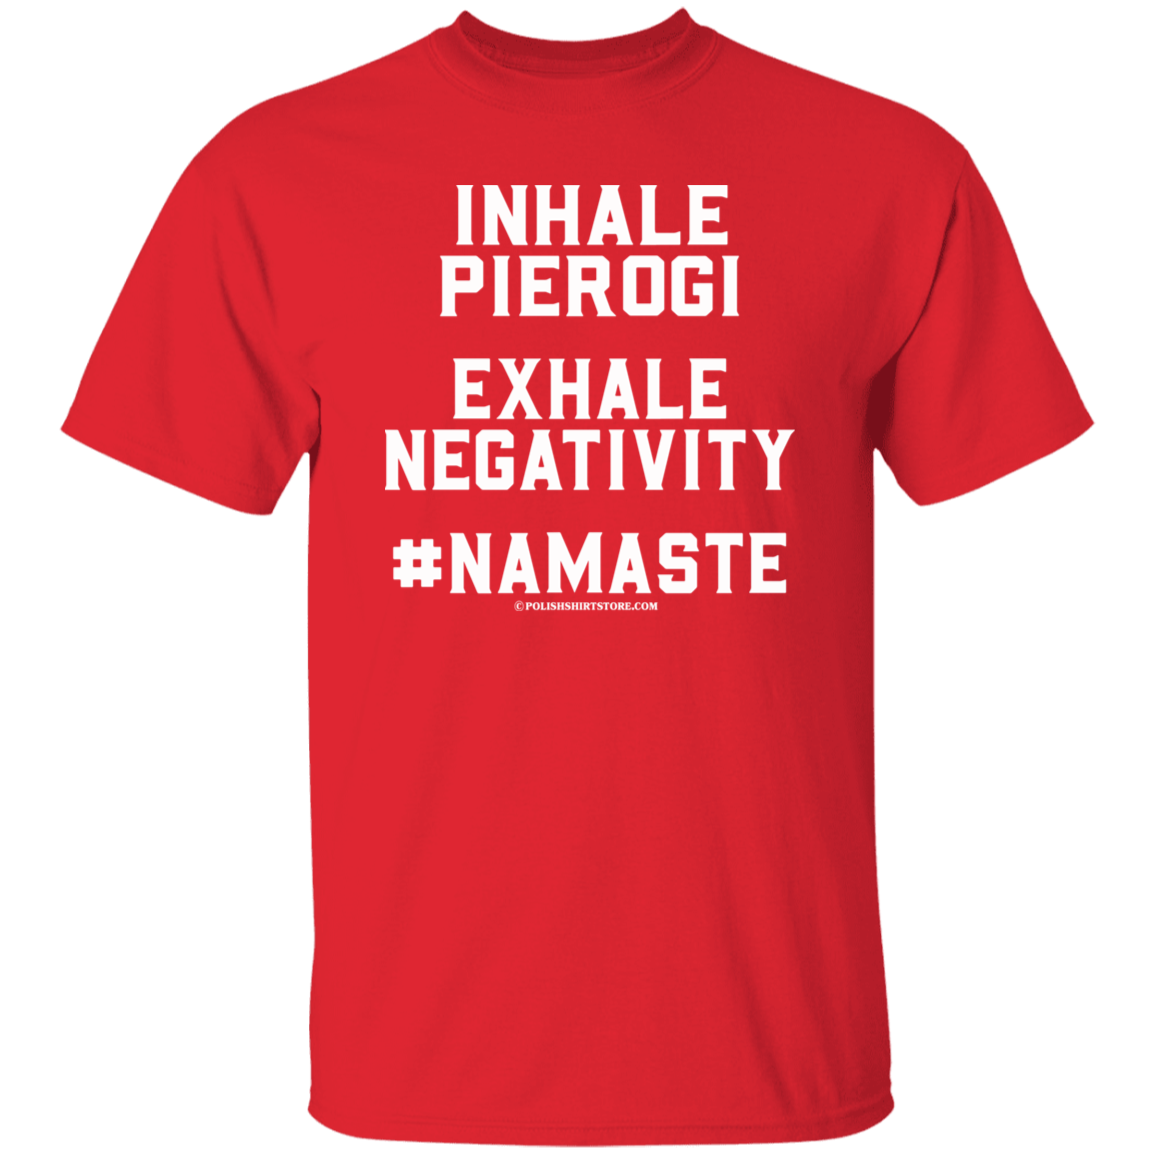 Inhale Pierogi Exhale Negativity #Namaste Apparel CustomCat G500 5.3 oz. T-Shirt Red S